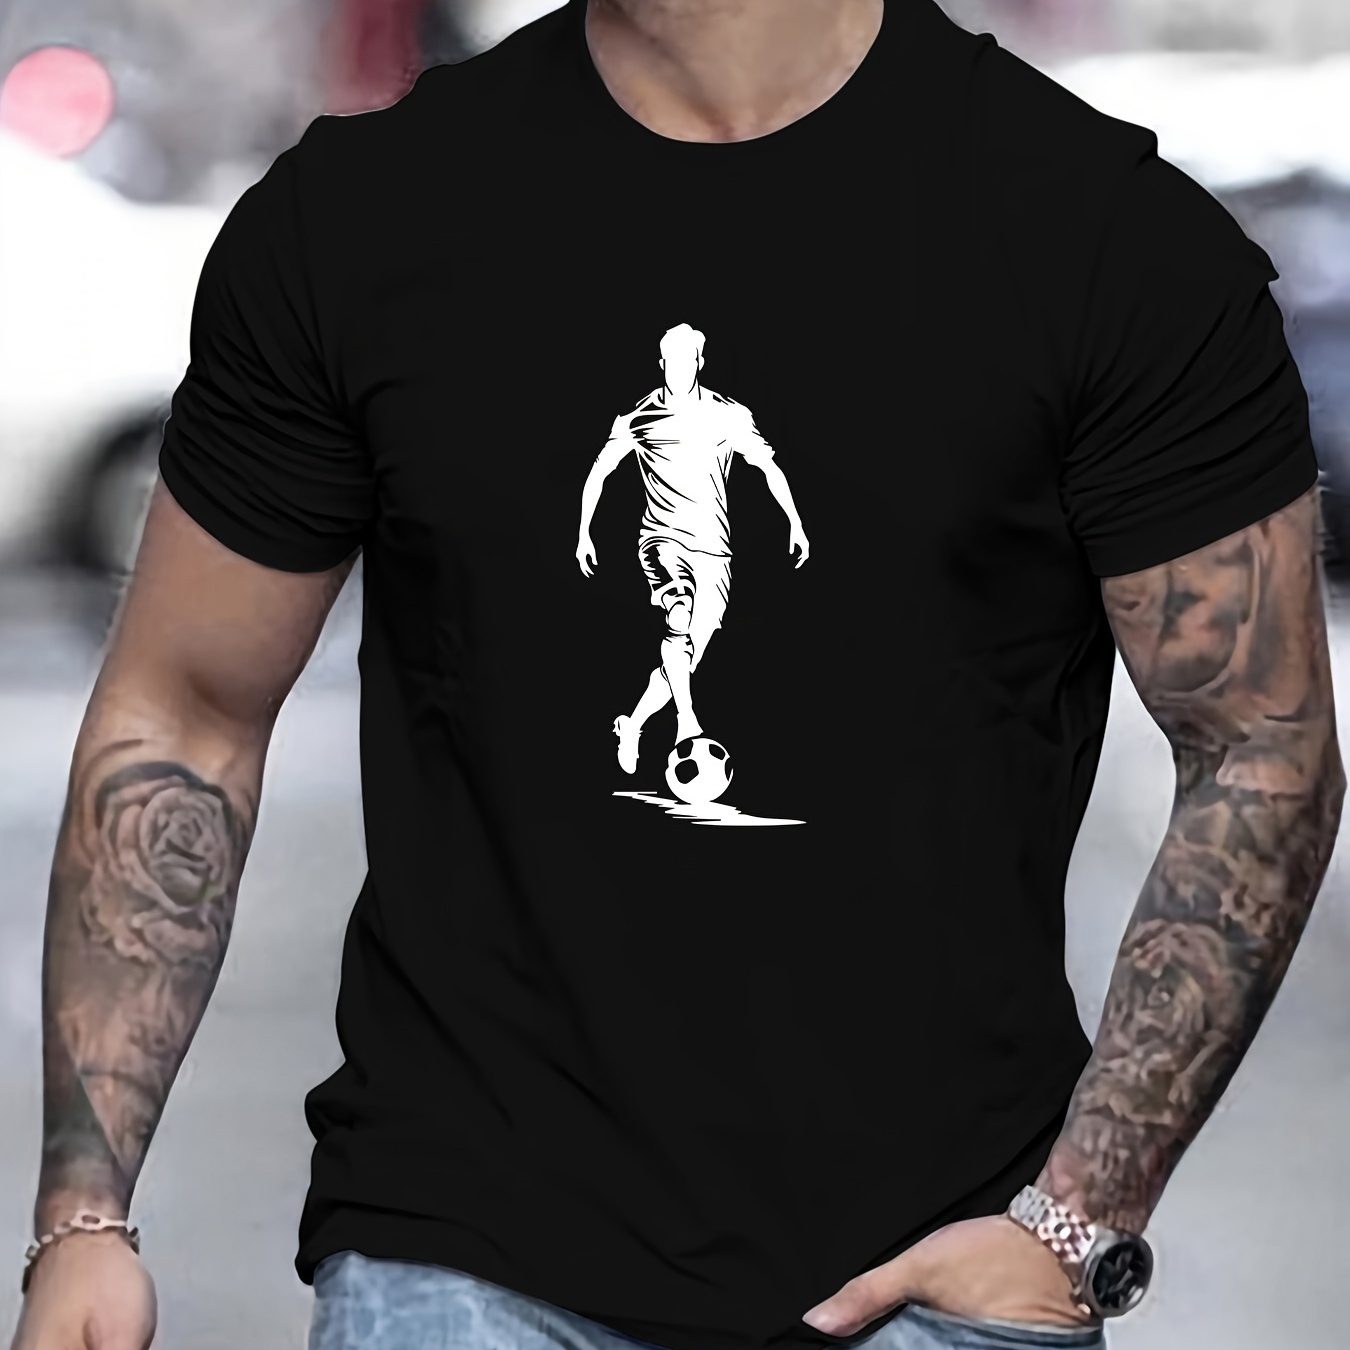 

Men's Football Kicker Print Short Sleeve T-shirts, Comfy Casual Elastic Crew Neck Tops For Men's Outdoor Activities